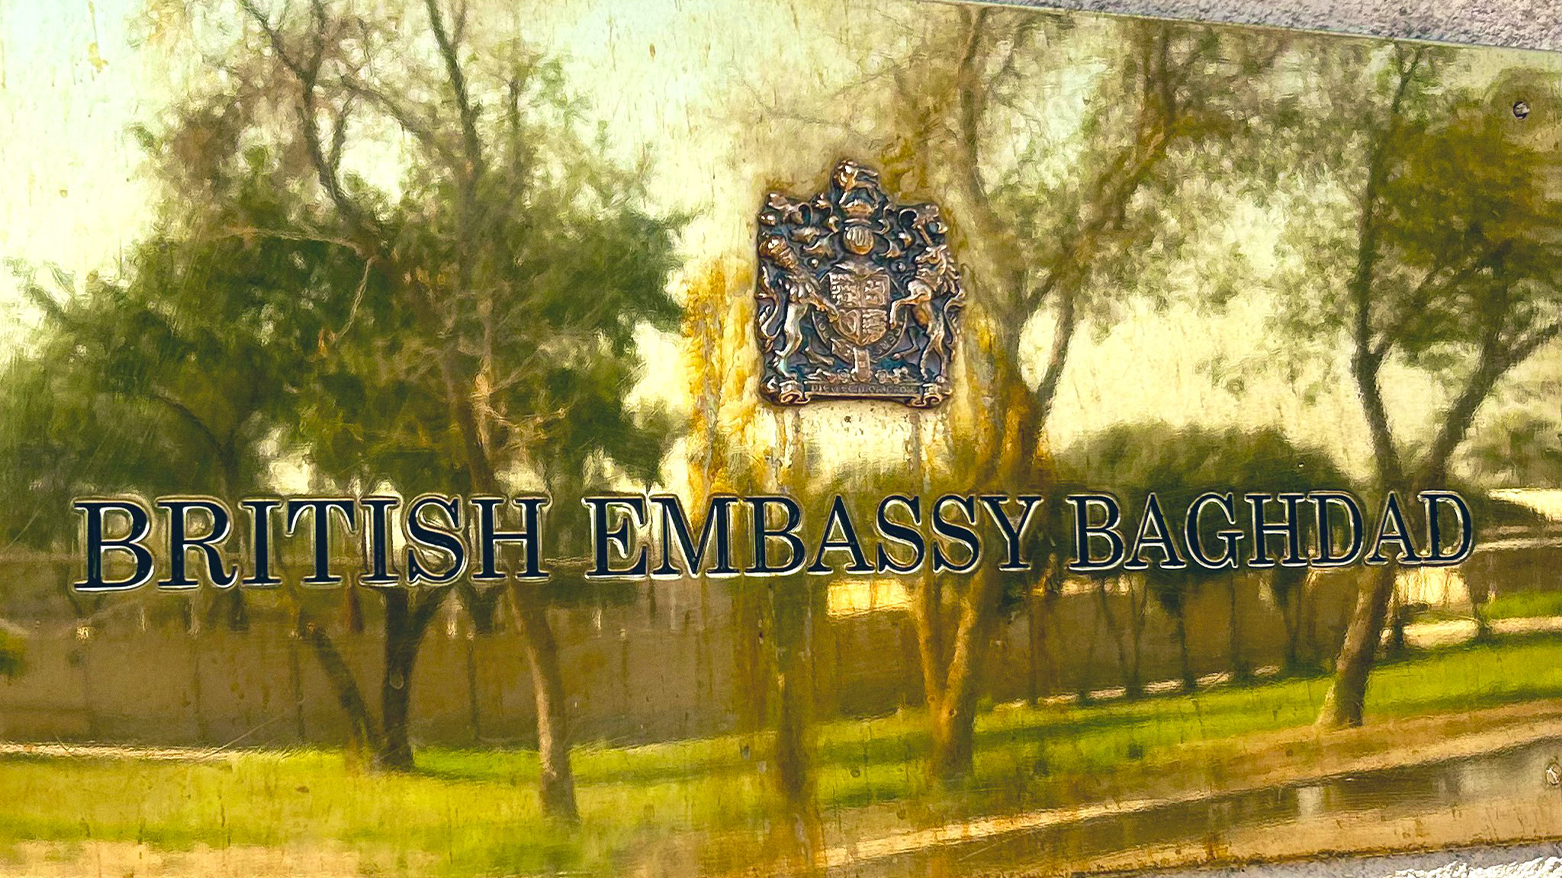 The British Embassy in Baghdad plaque. (Photo: British Embassy)